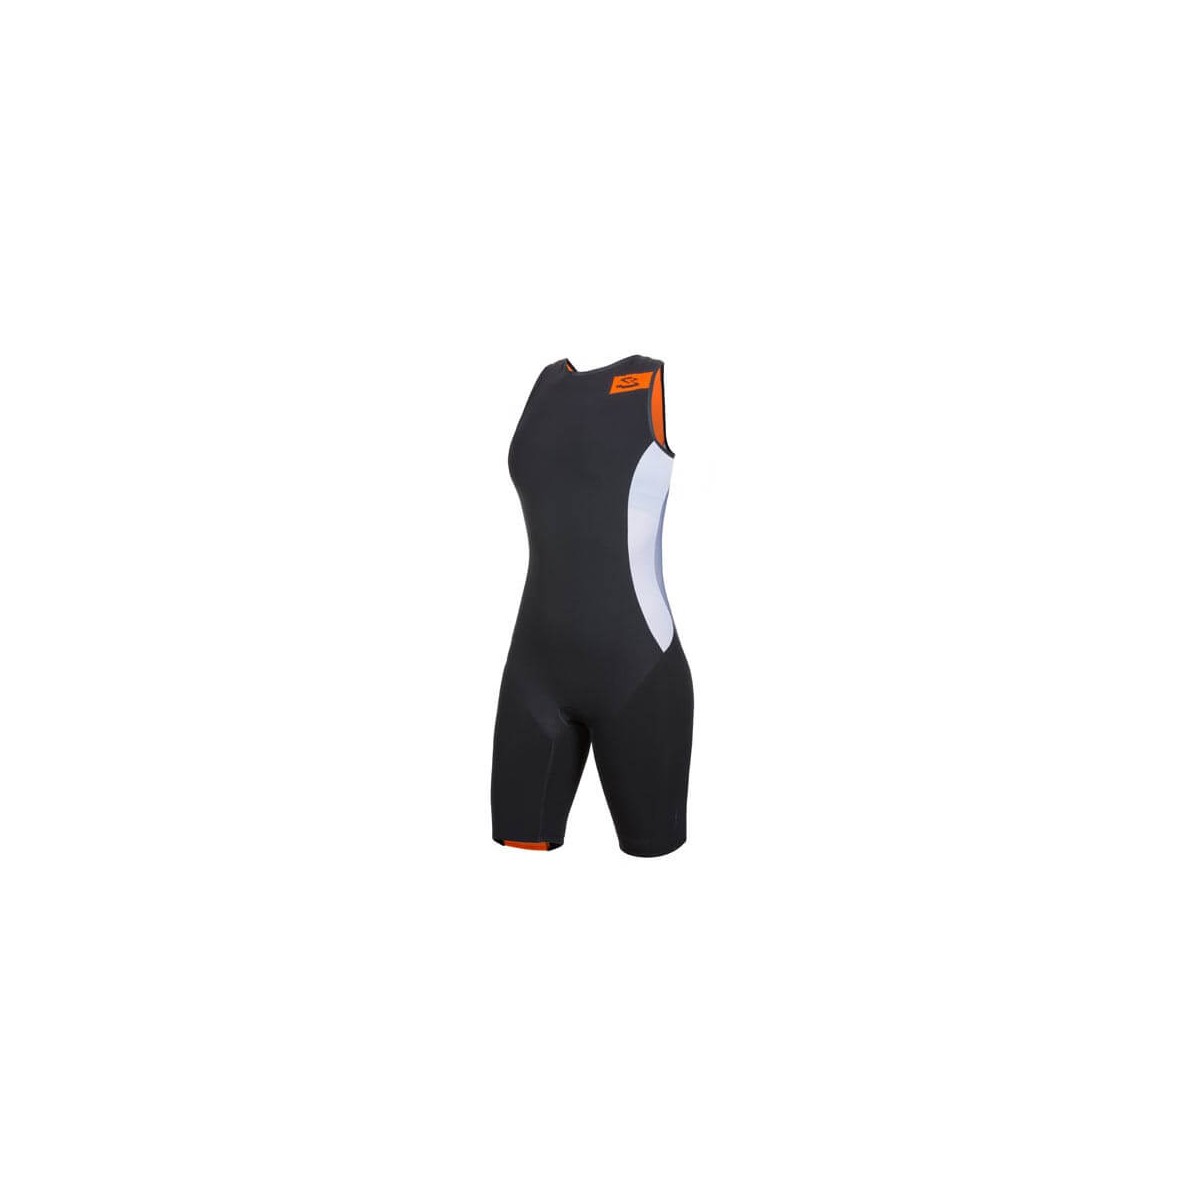 Tri Suit Spiuk Sprint Feminino preto / branco / laranja, Tamanho M